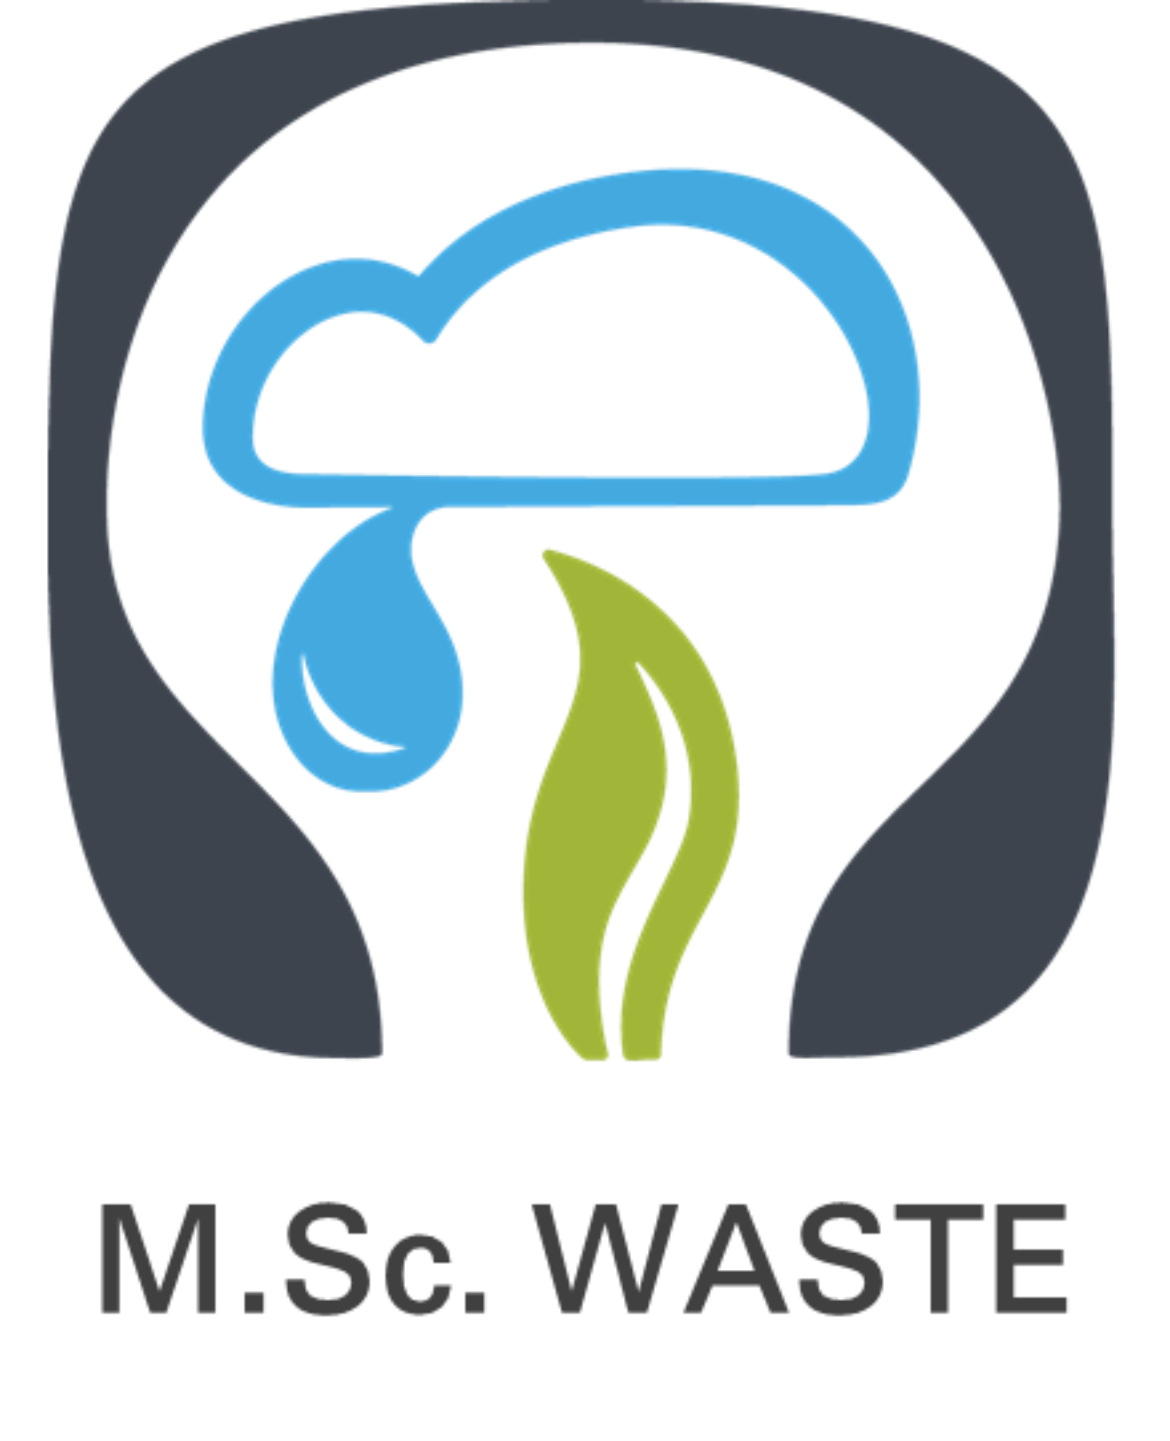 M.Sc. WASTE Logo